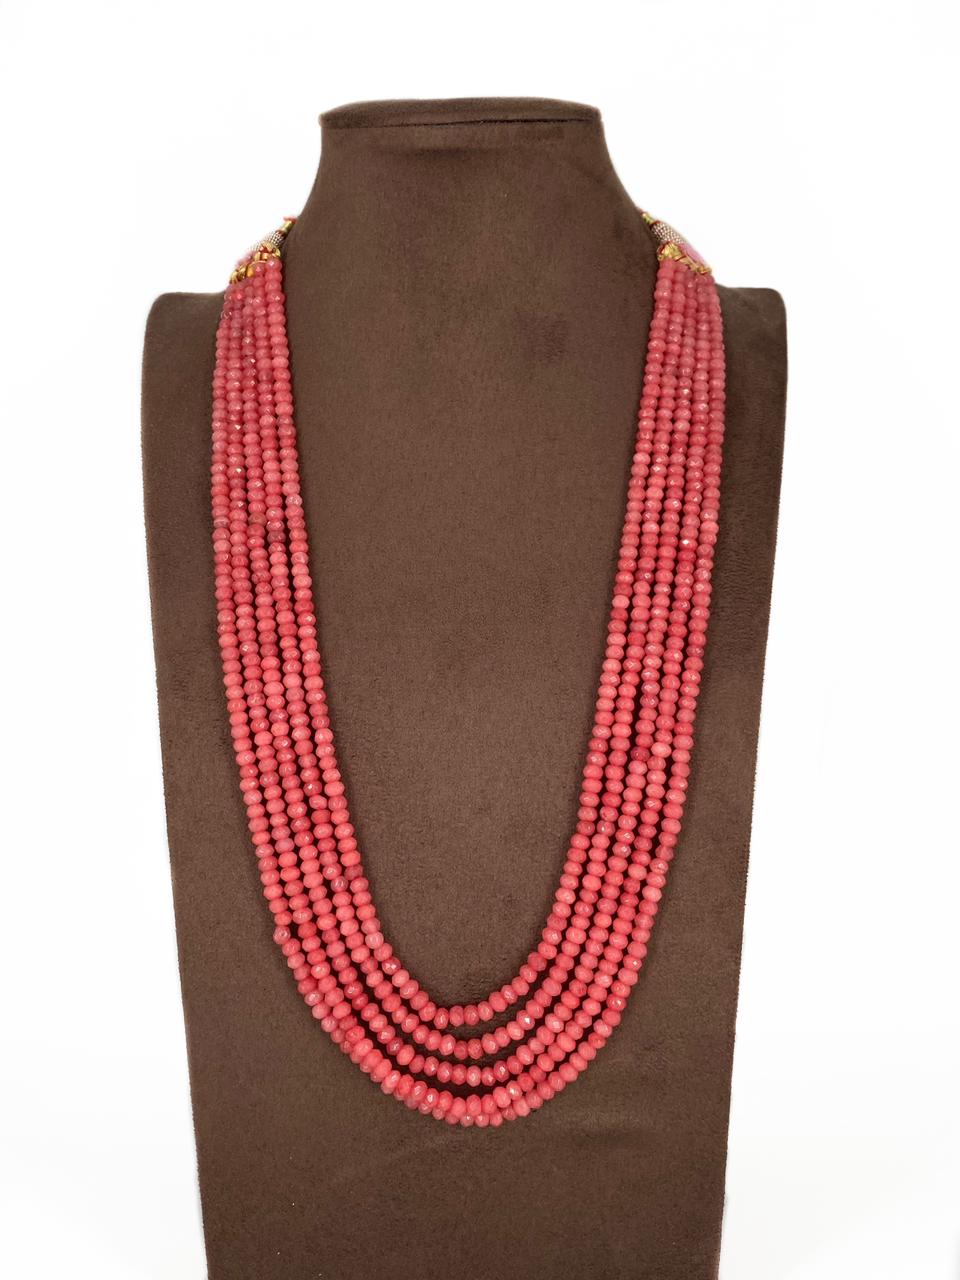 Multilayered Semi Precious Peach Jade Beads Necklace By Gehna Shop Beads Jewellery